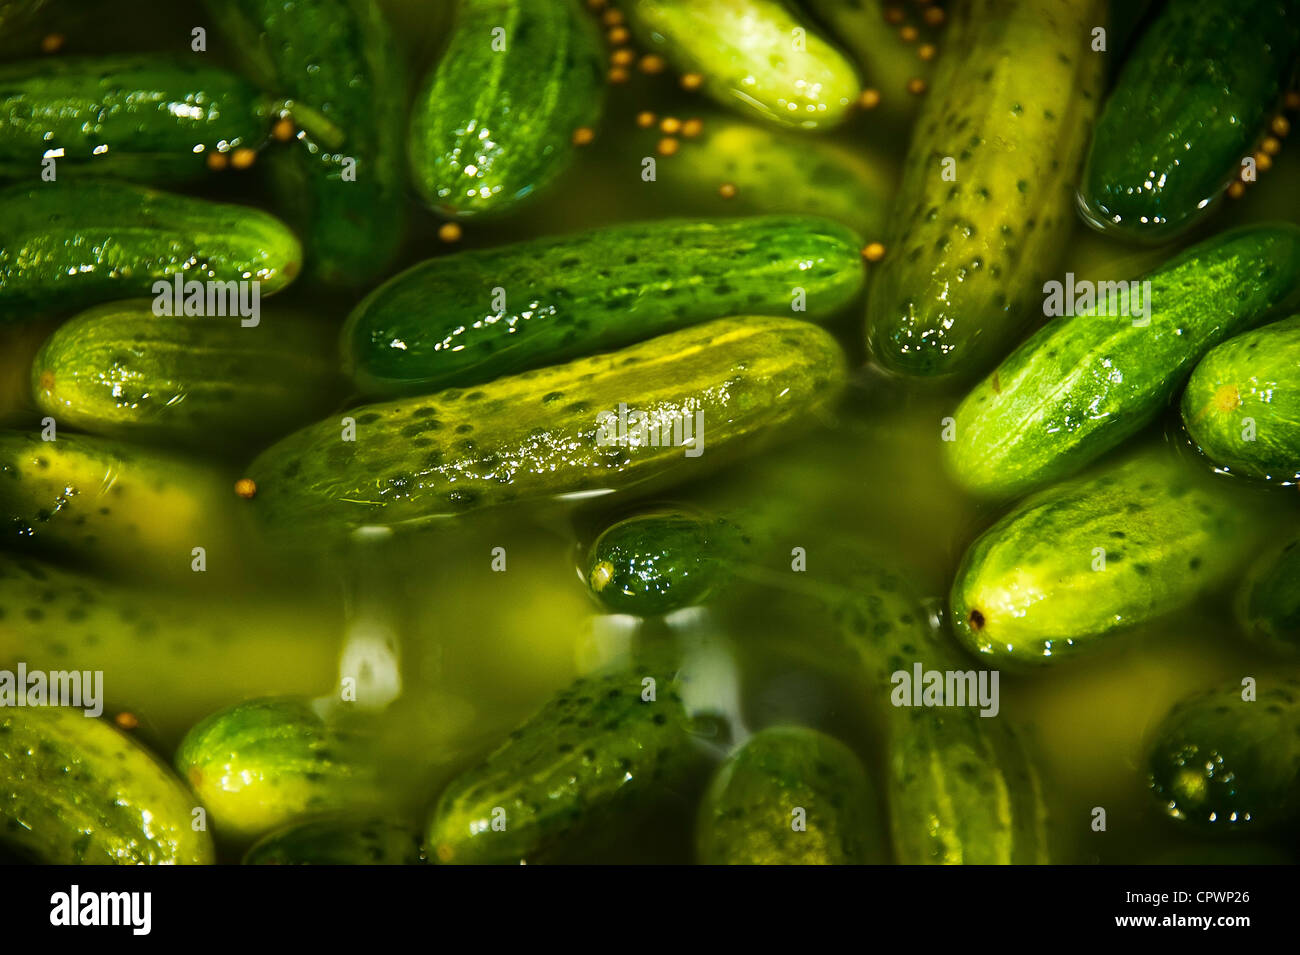 Barrel of pickles. Stock Photo